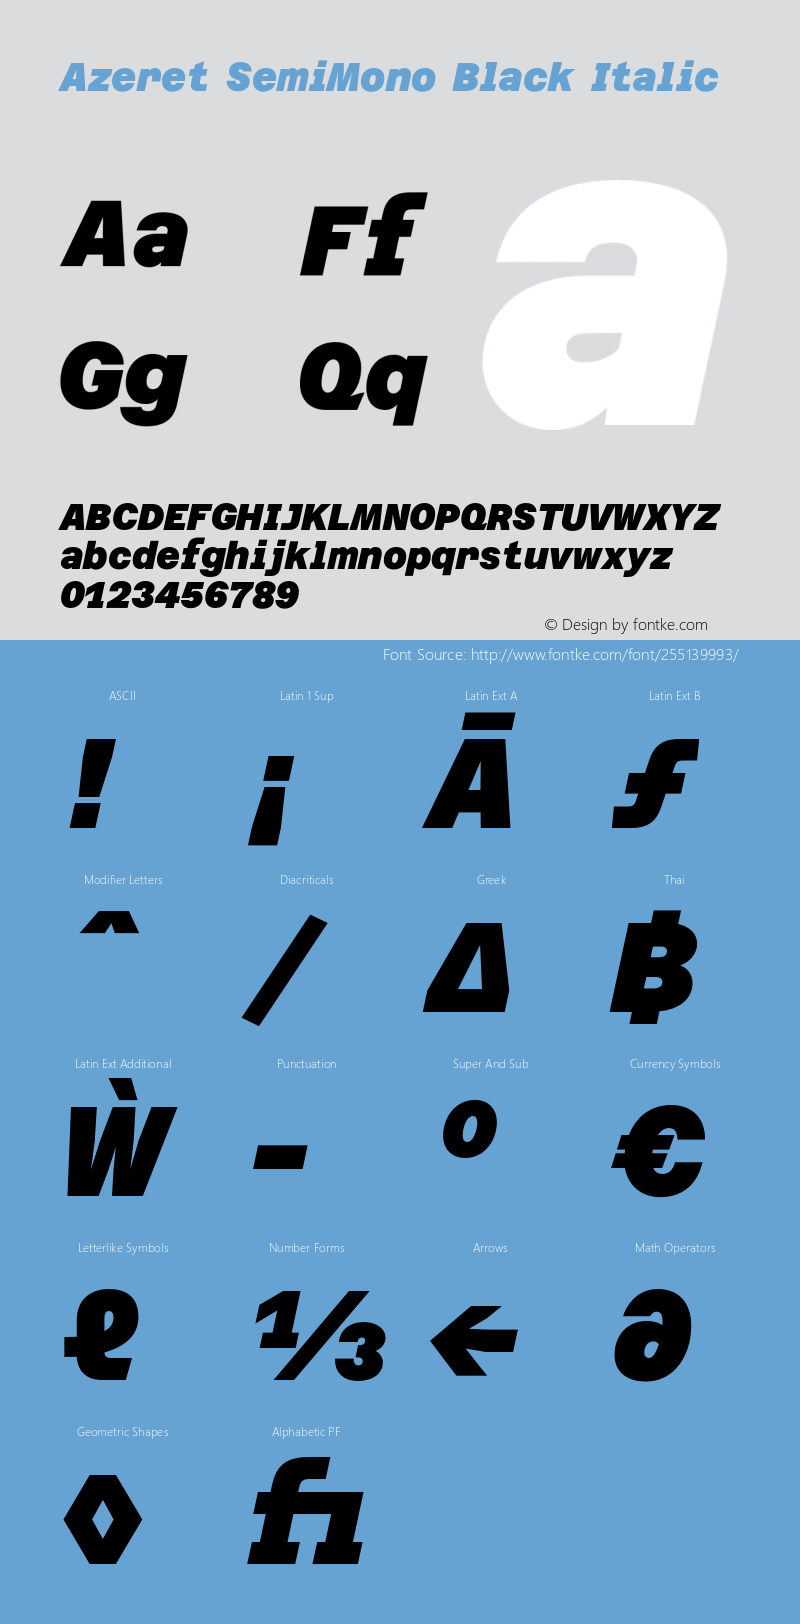 Azeret SemiMono Black Italic Version 1.000; Glyphs 3.0.3, build 3084图片样张